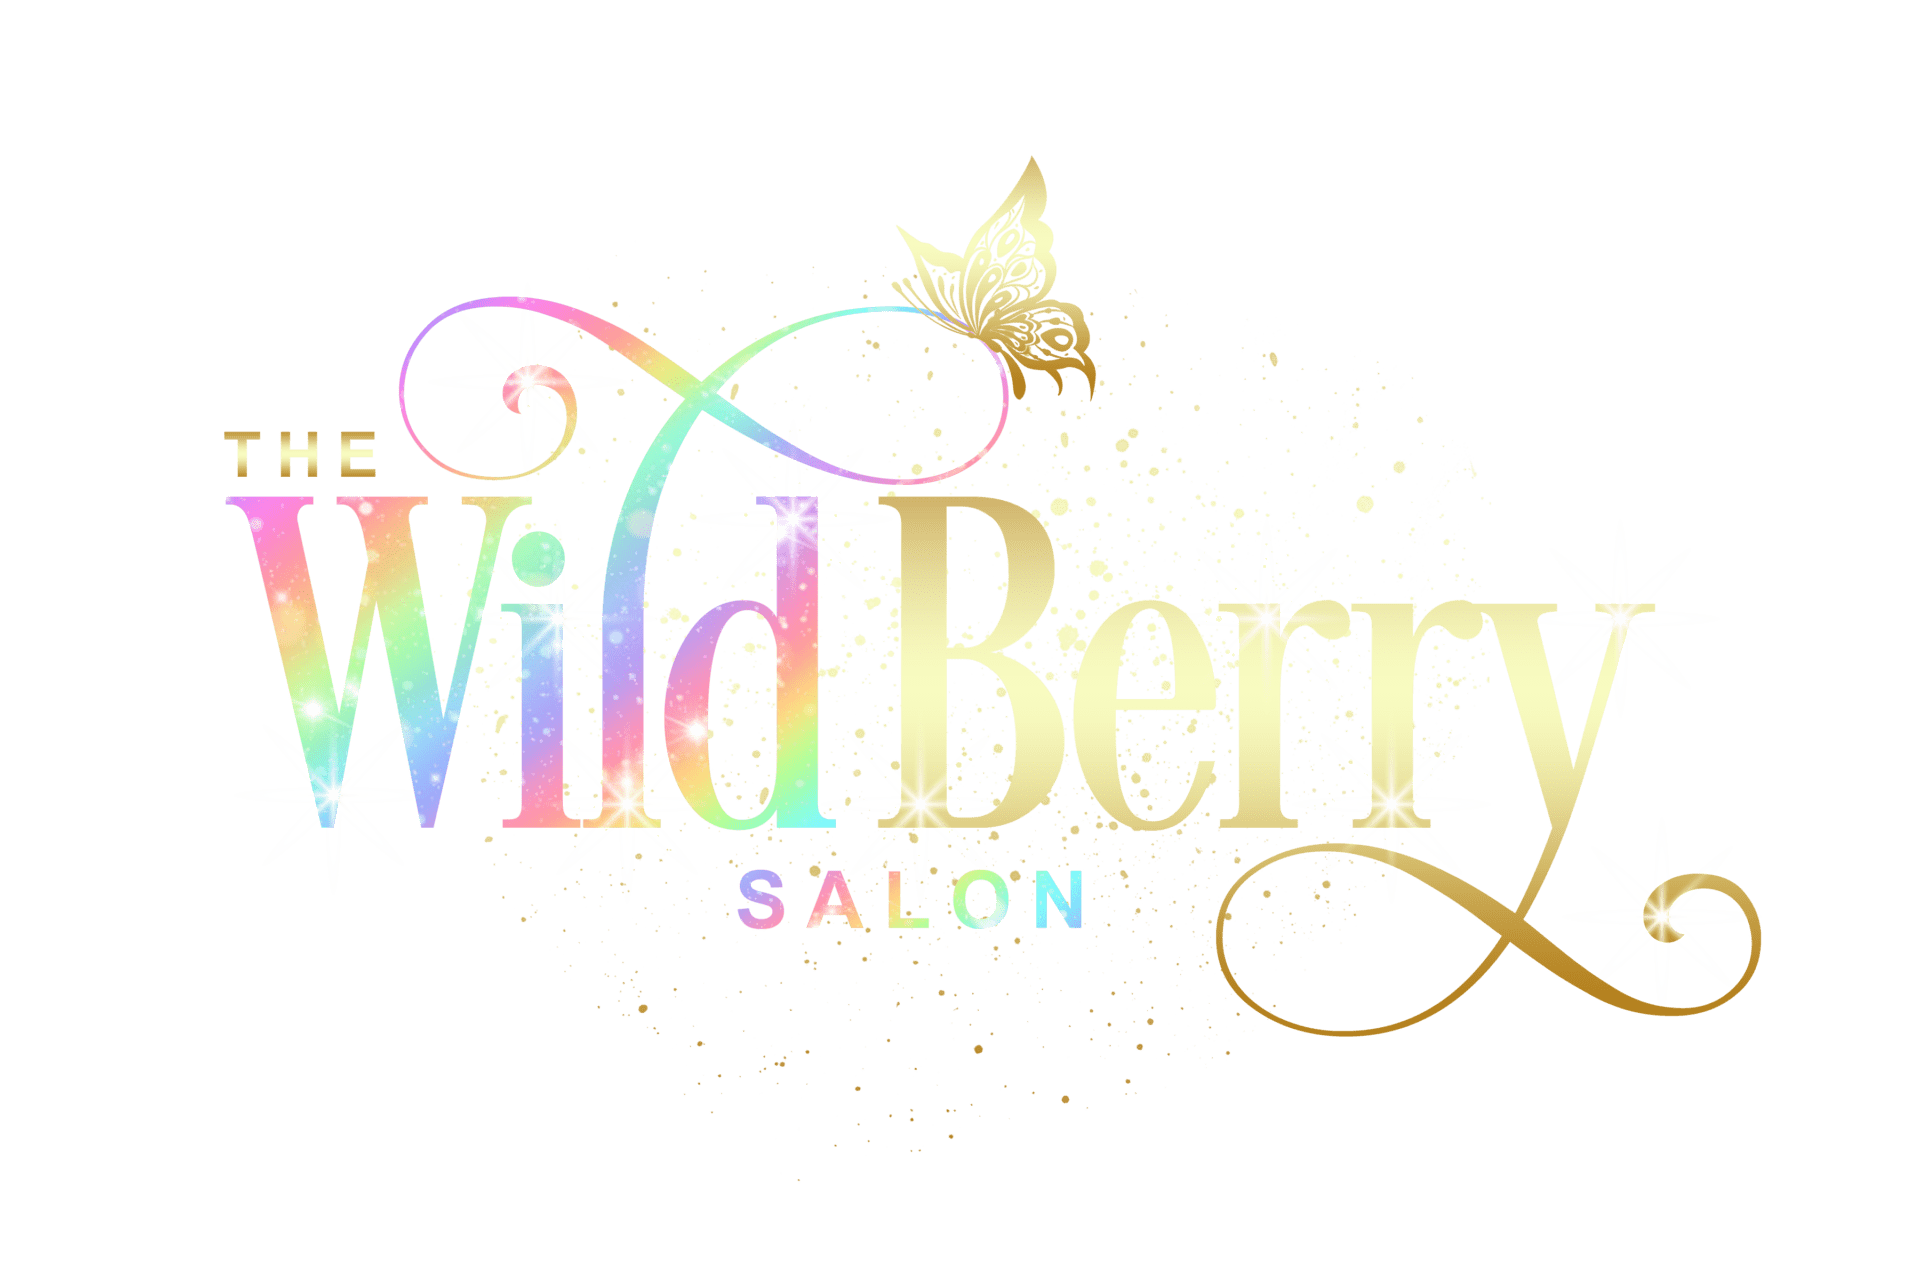 The Wild Berry Salon logo